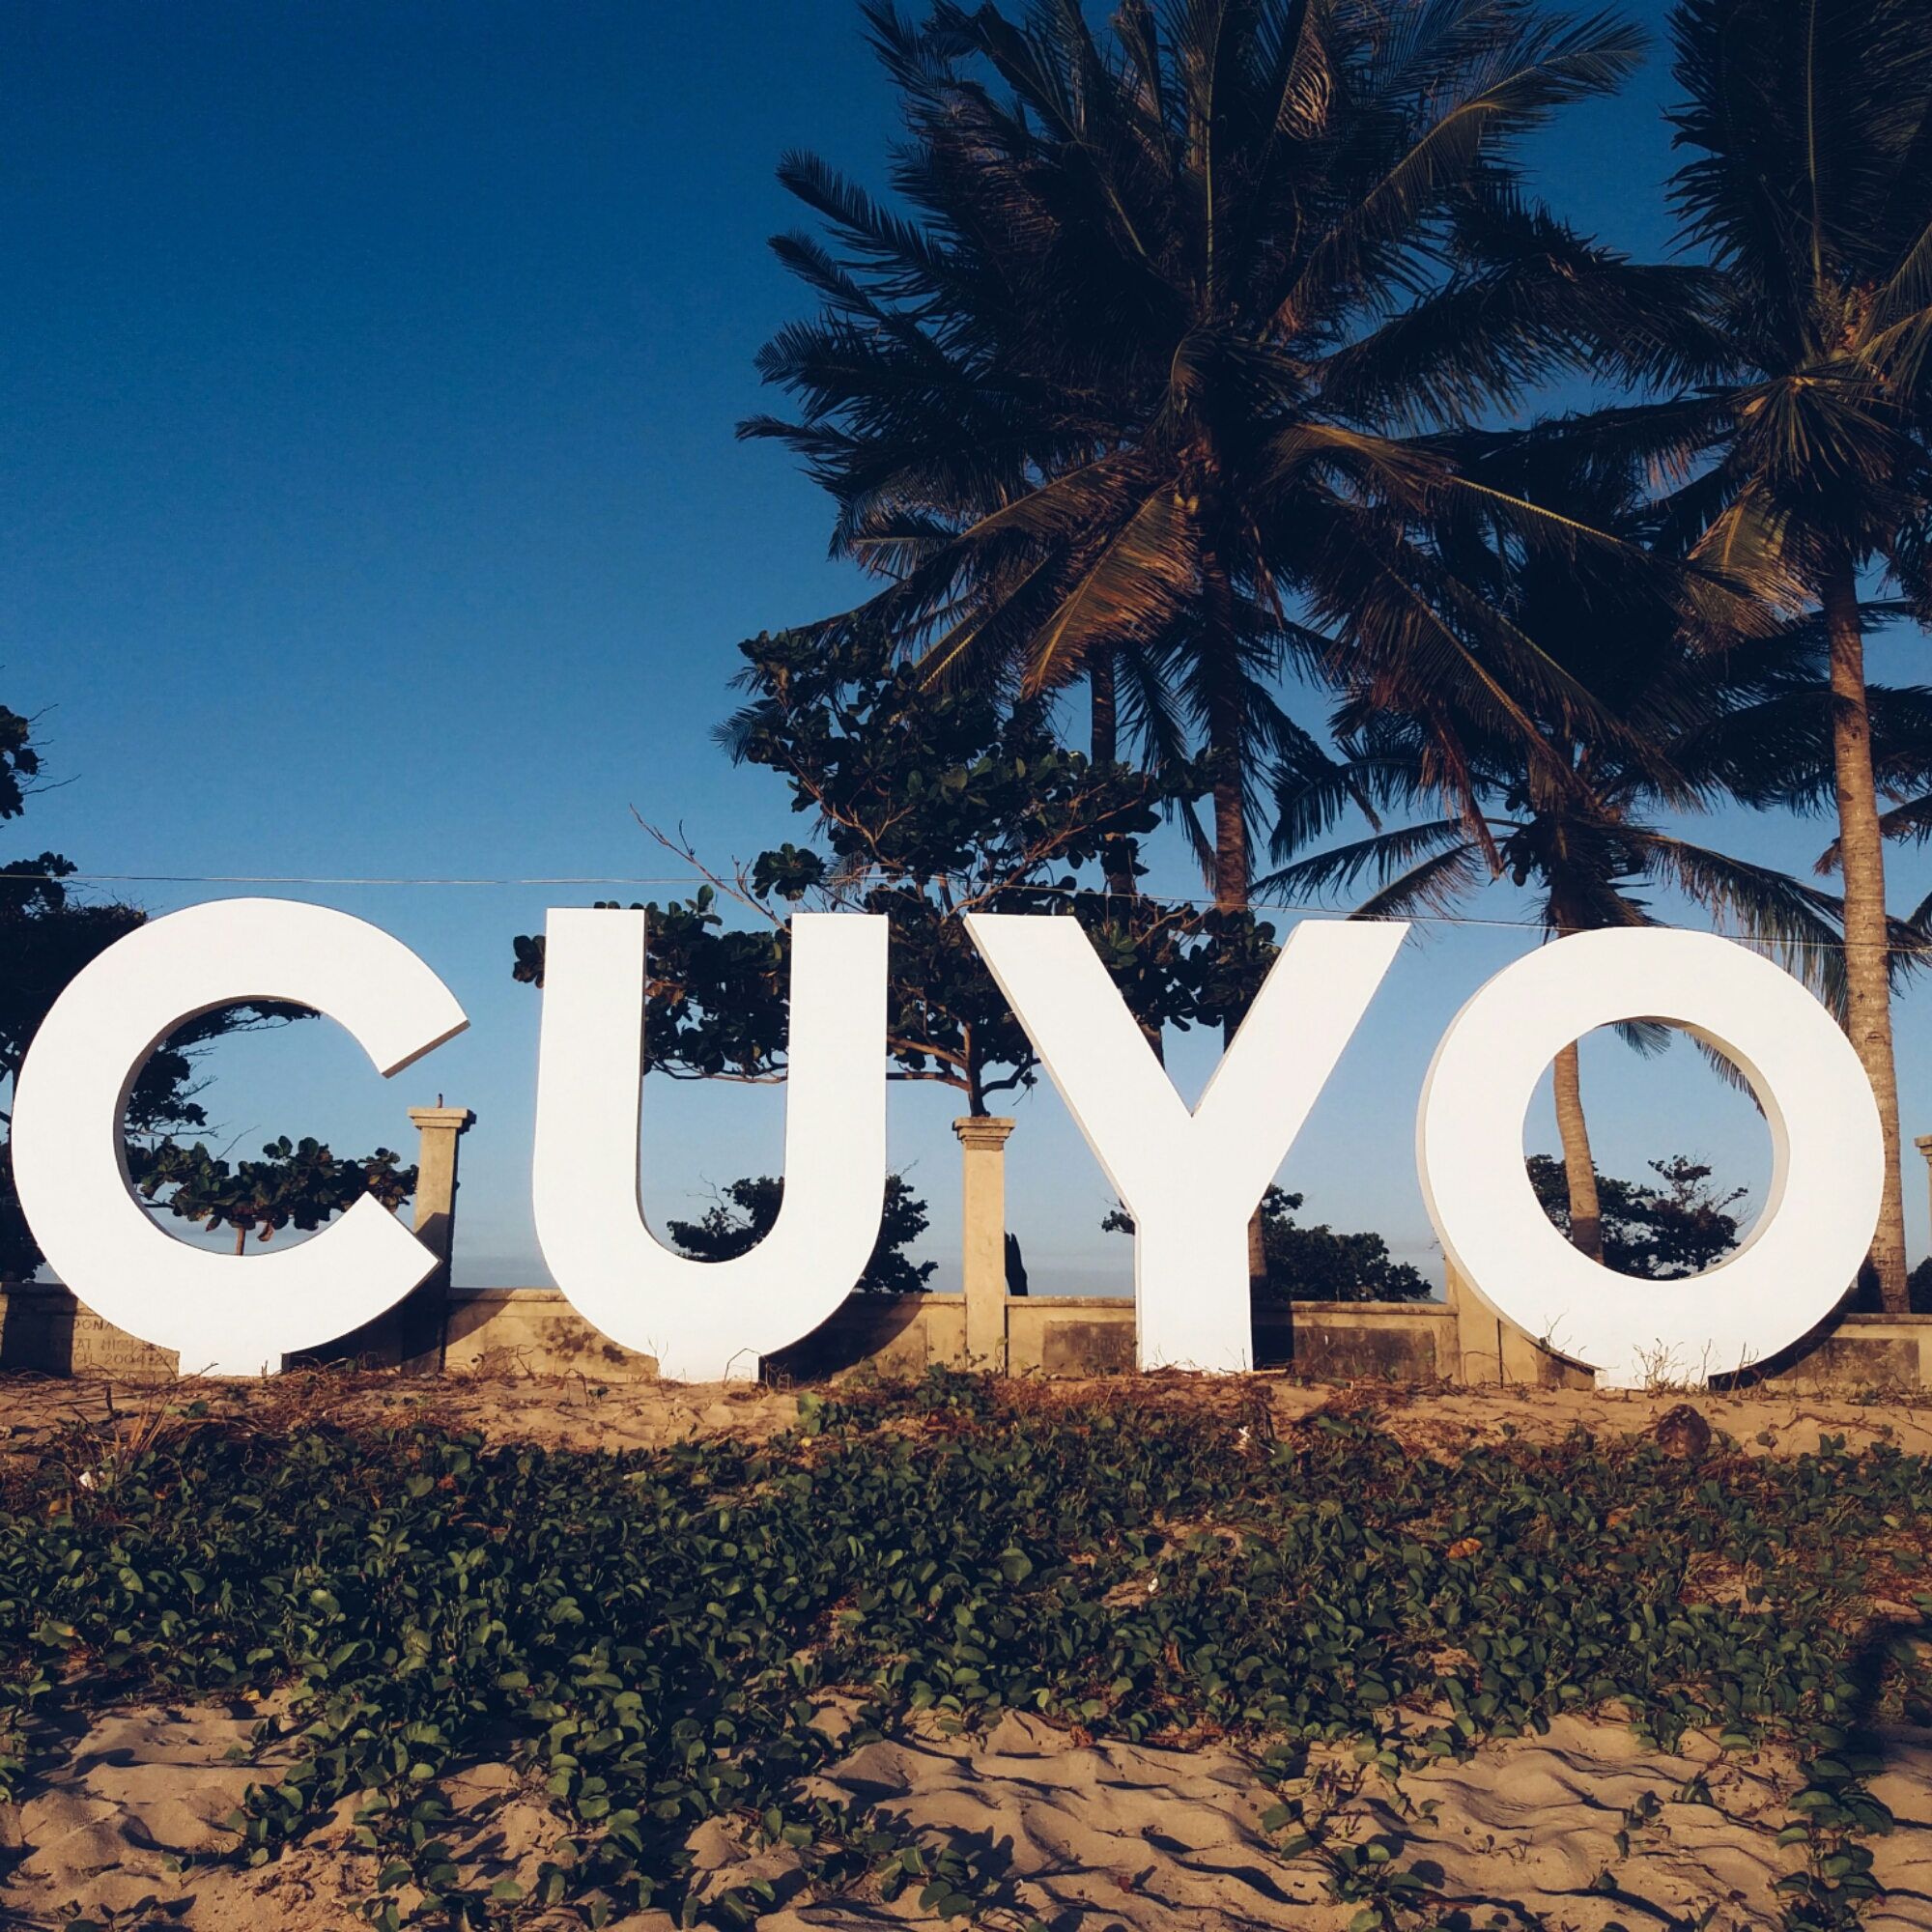 Cuyo Island - Welcome